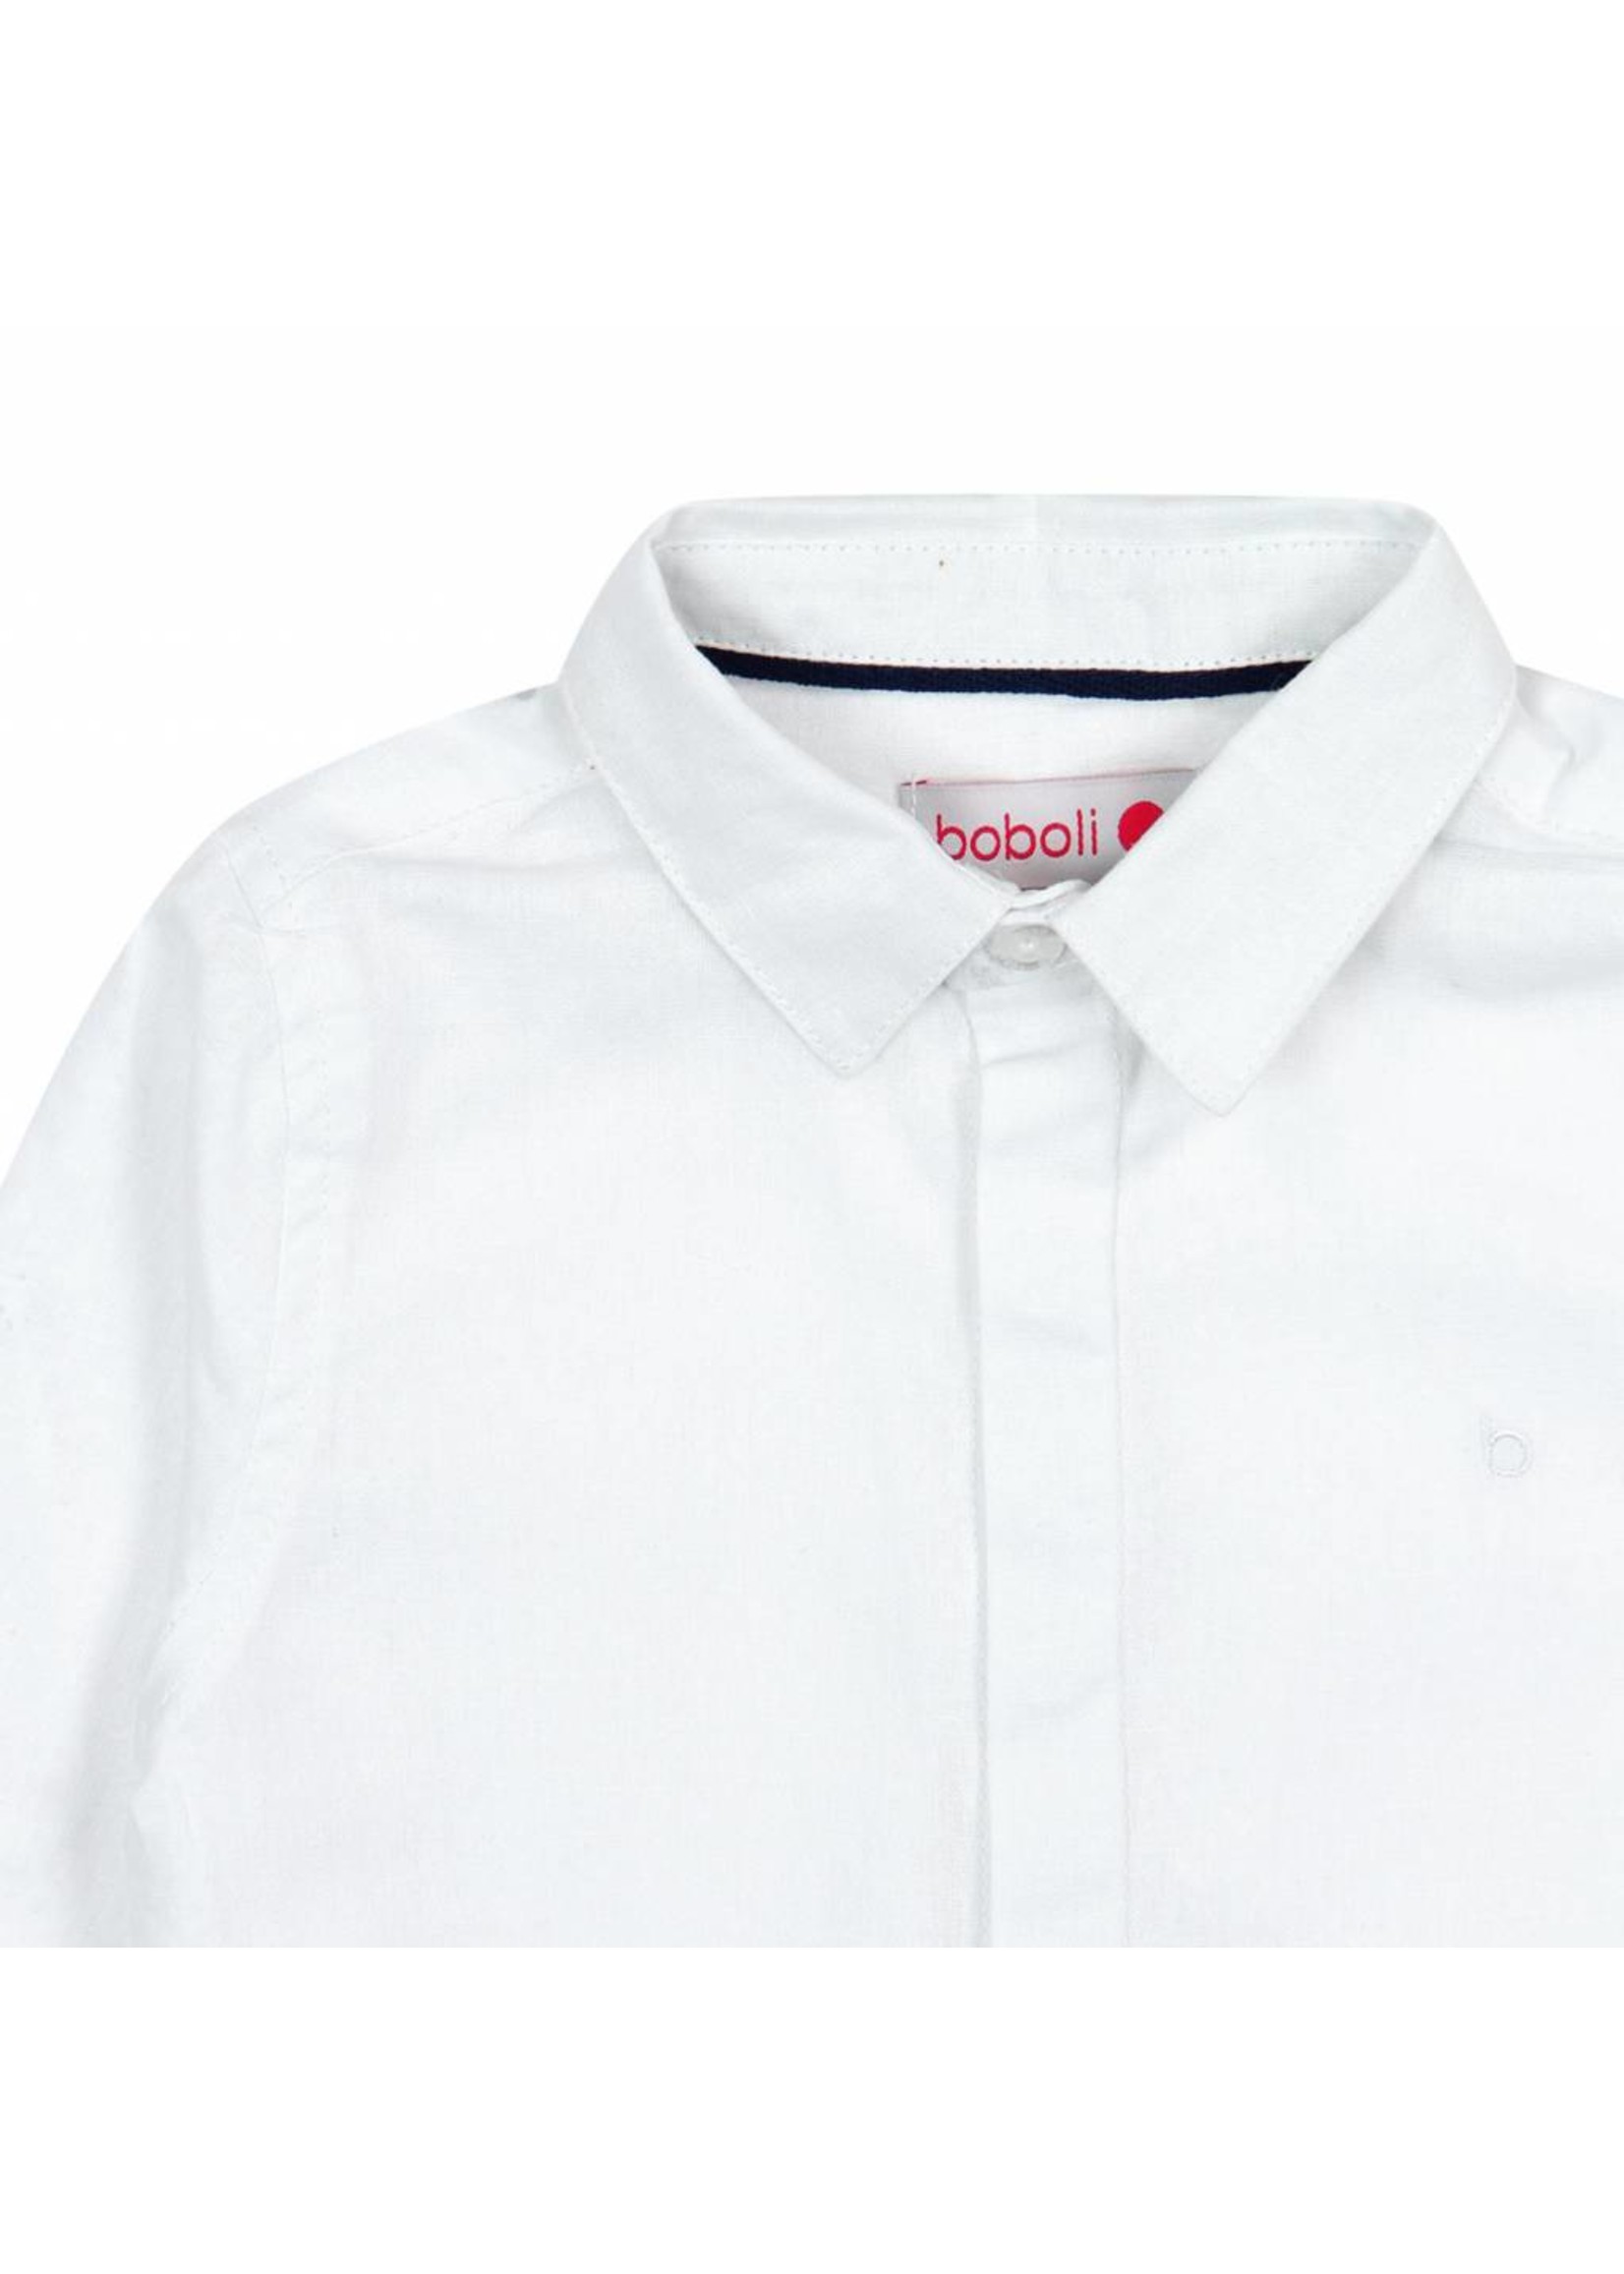 Boboli Boboli Linen shirt long sleeves for baby boy NAVY